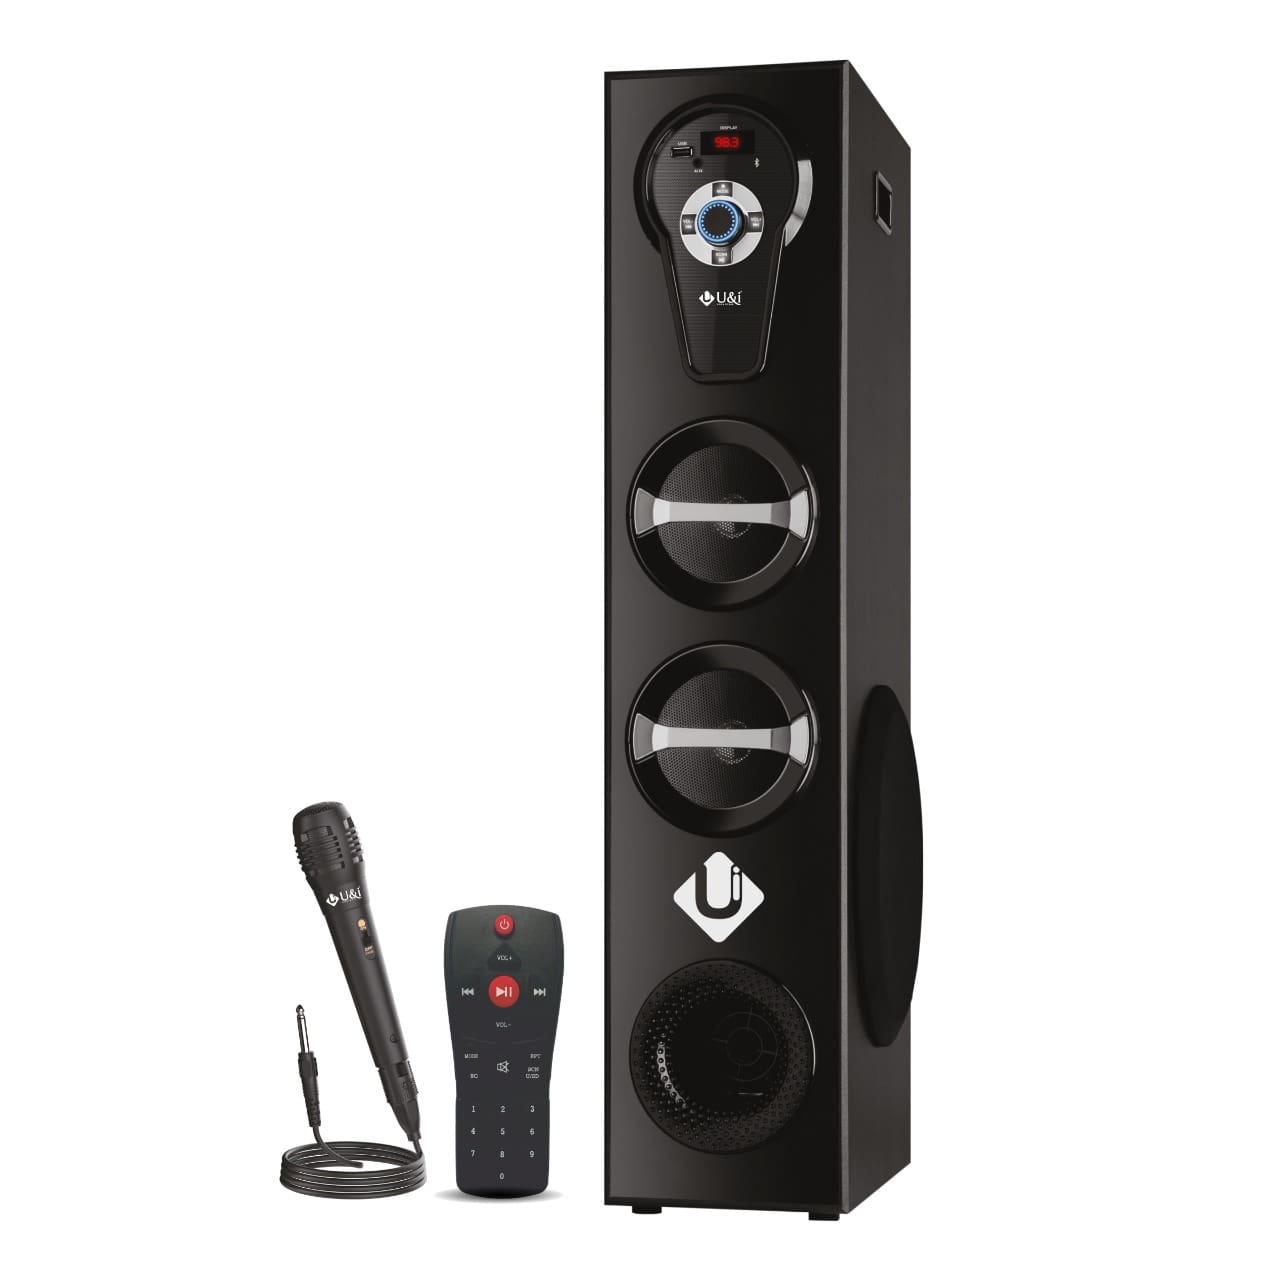 Ui Tower Box Series 100 Watt Wireless Speaker min